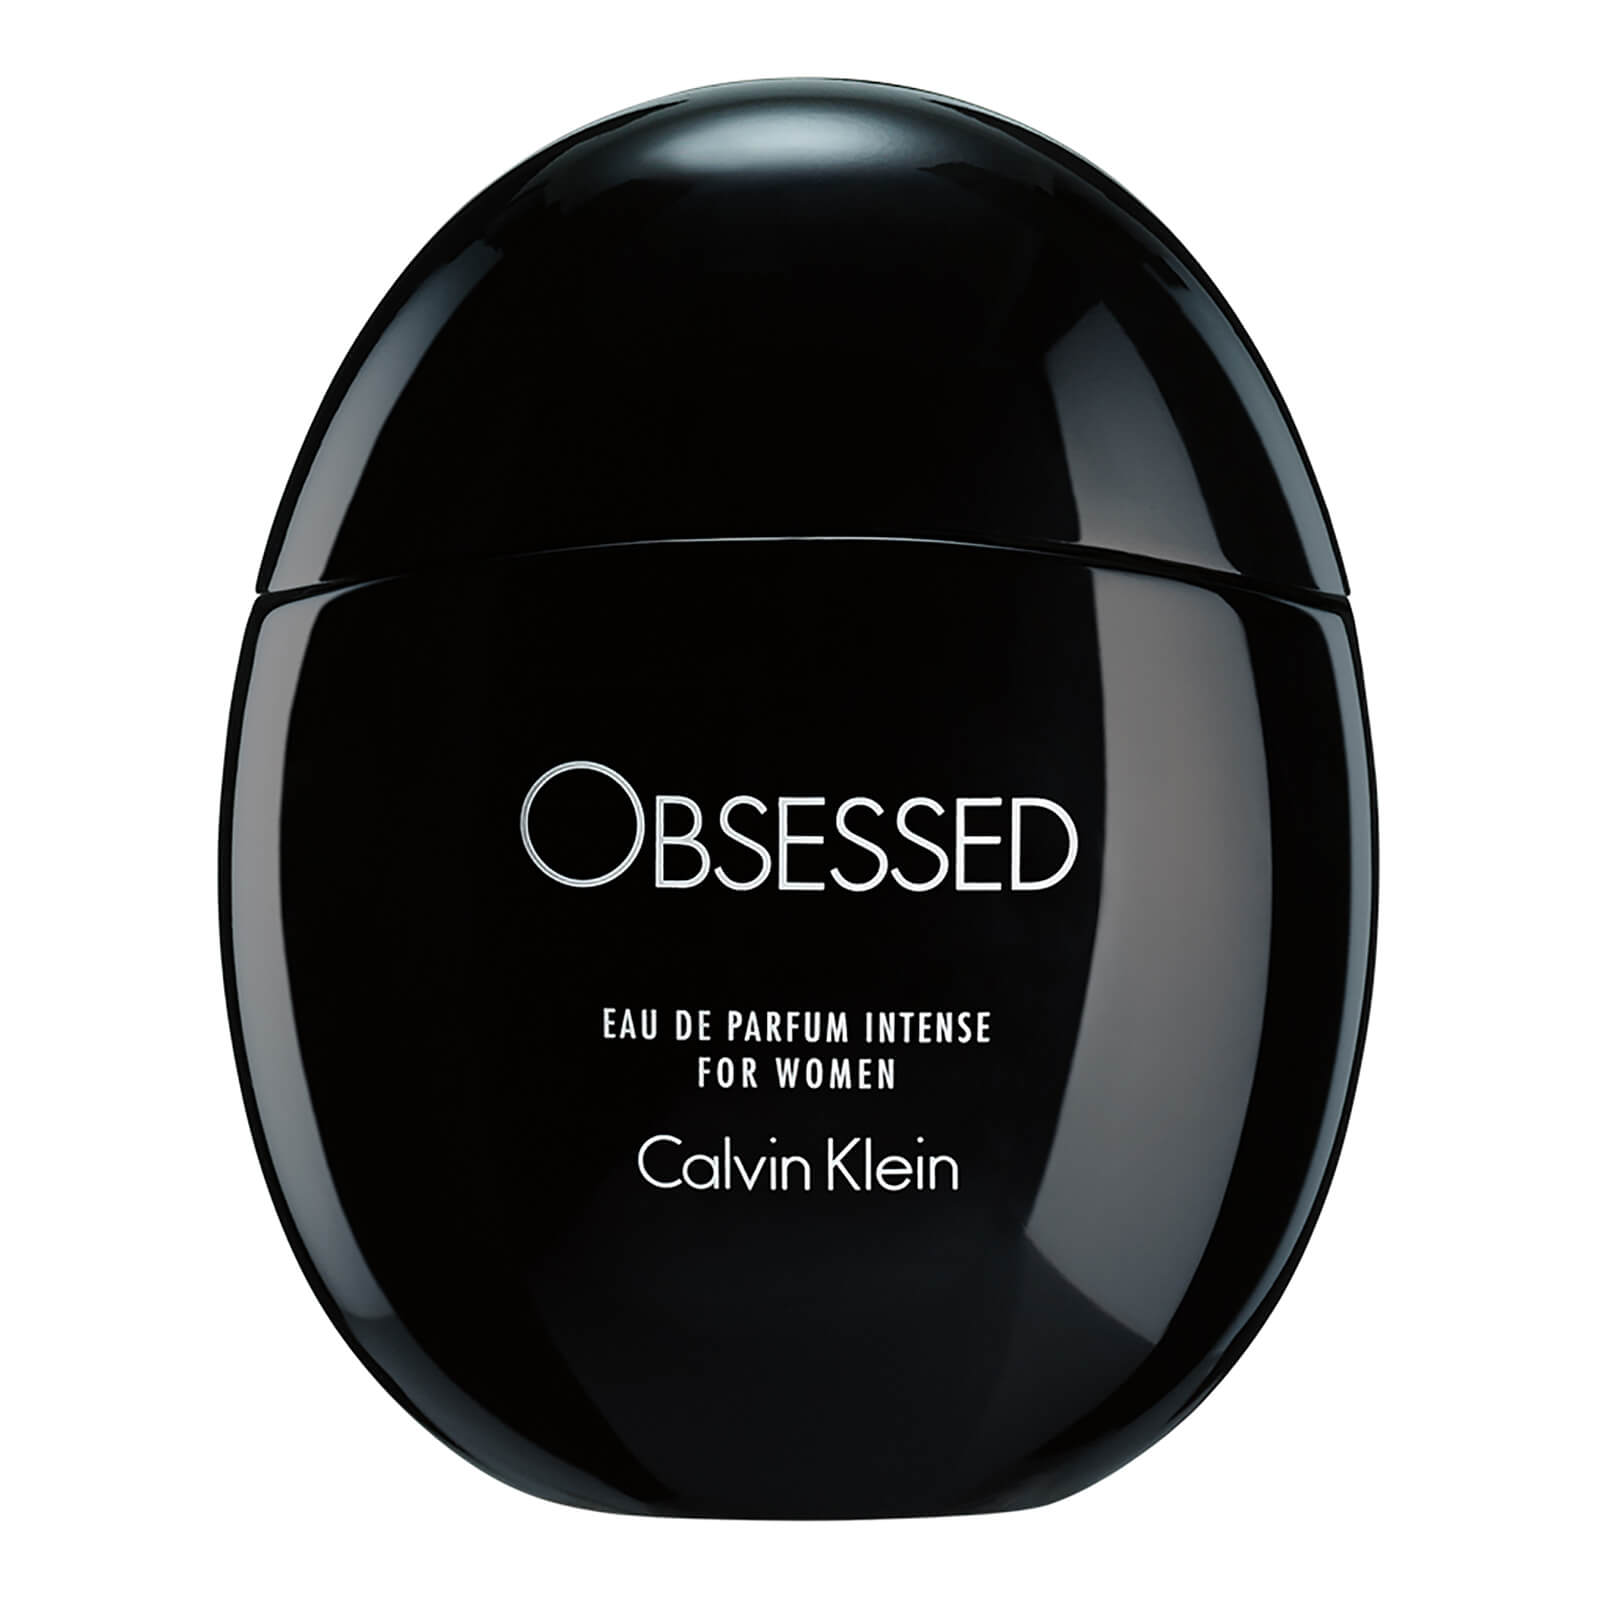 Eau de Parfum intenso para mujer Obsessed de Calvin Klein 30 ml